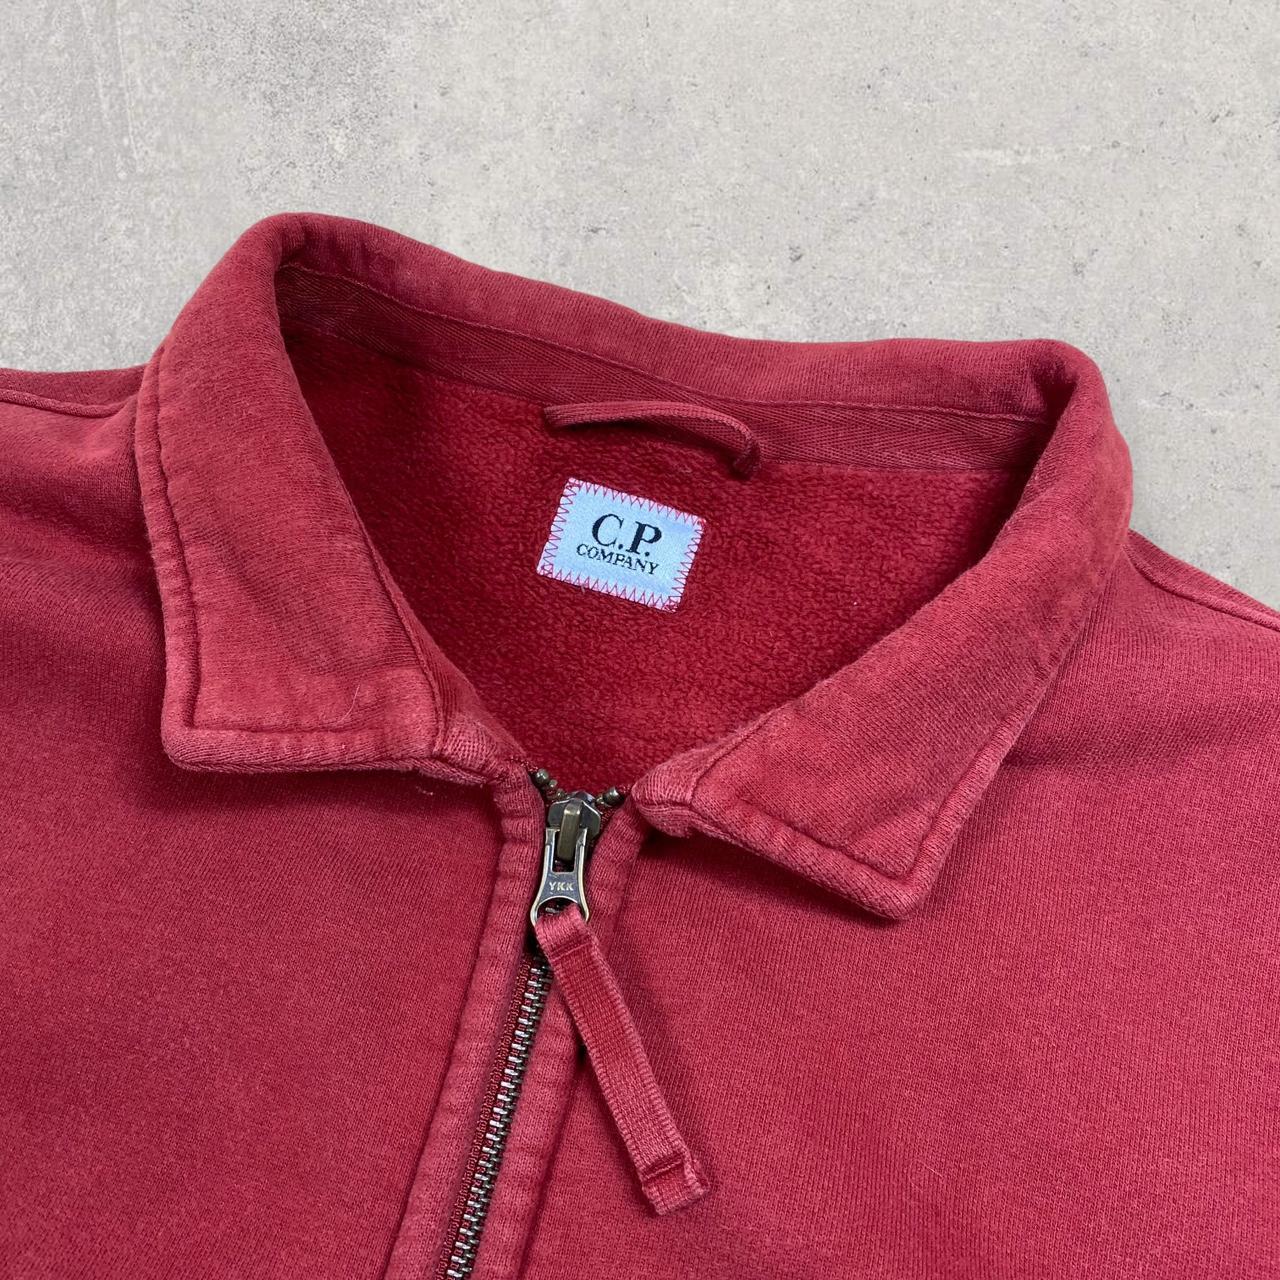 CP Company Red Zipped Watch Viewer Sweatshirt Fleece... - Depop